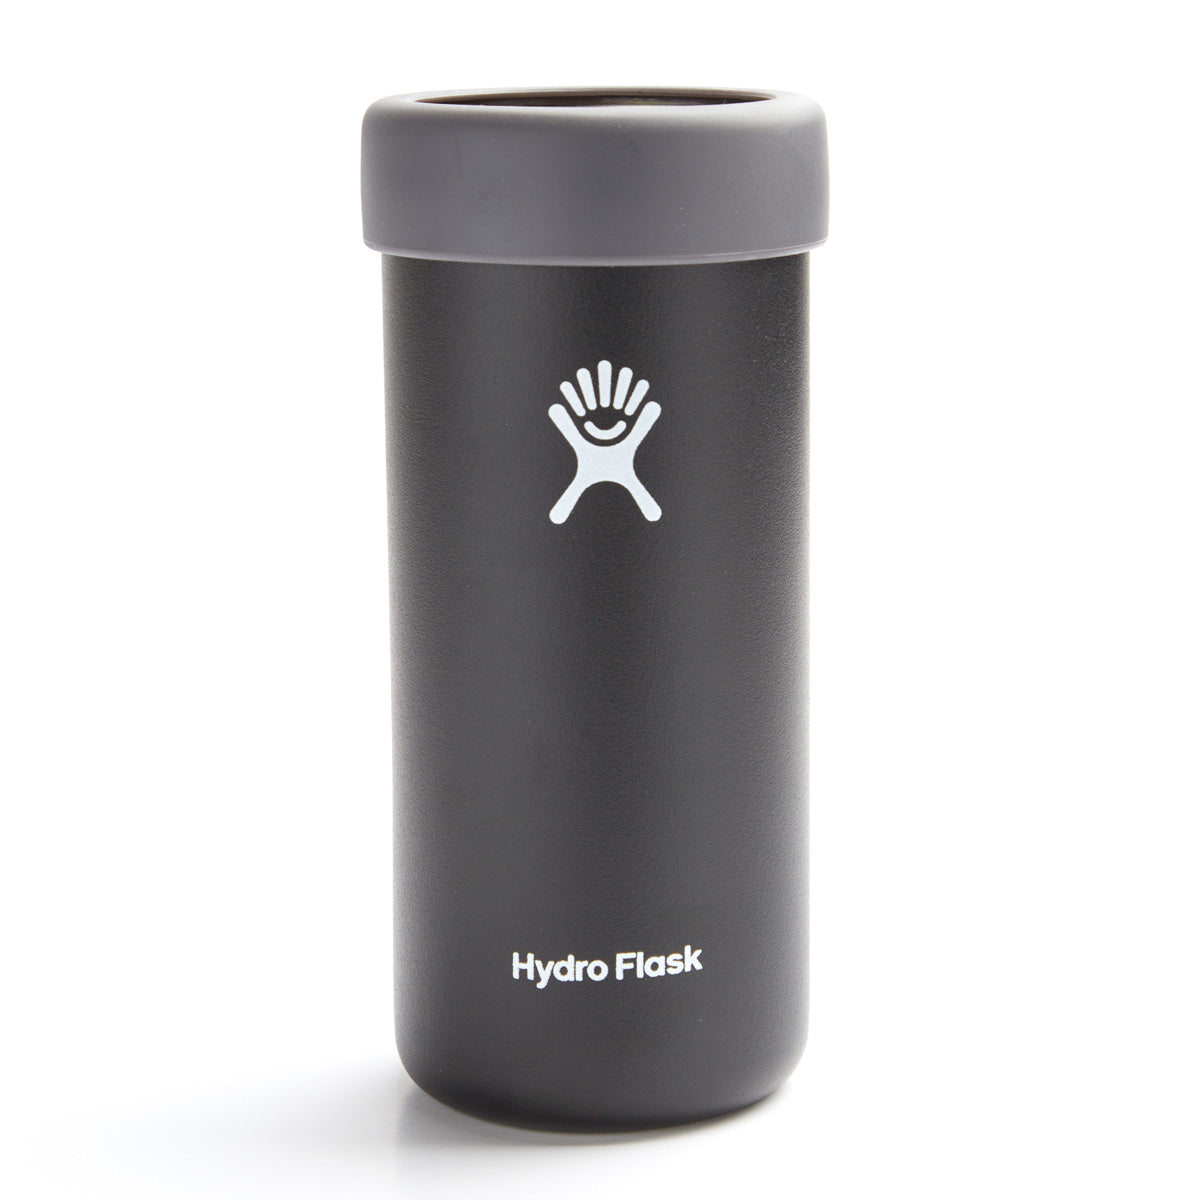 Hydro flask 12 oz Slim Cooler